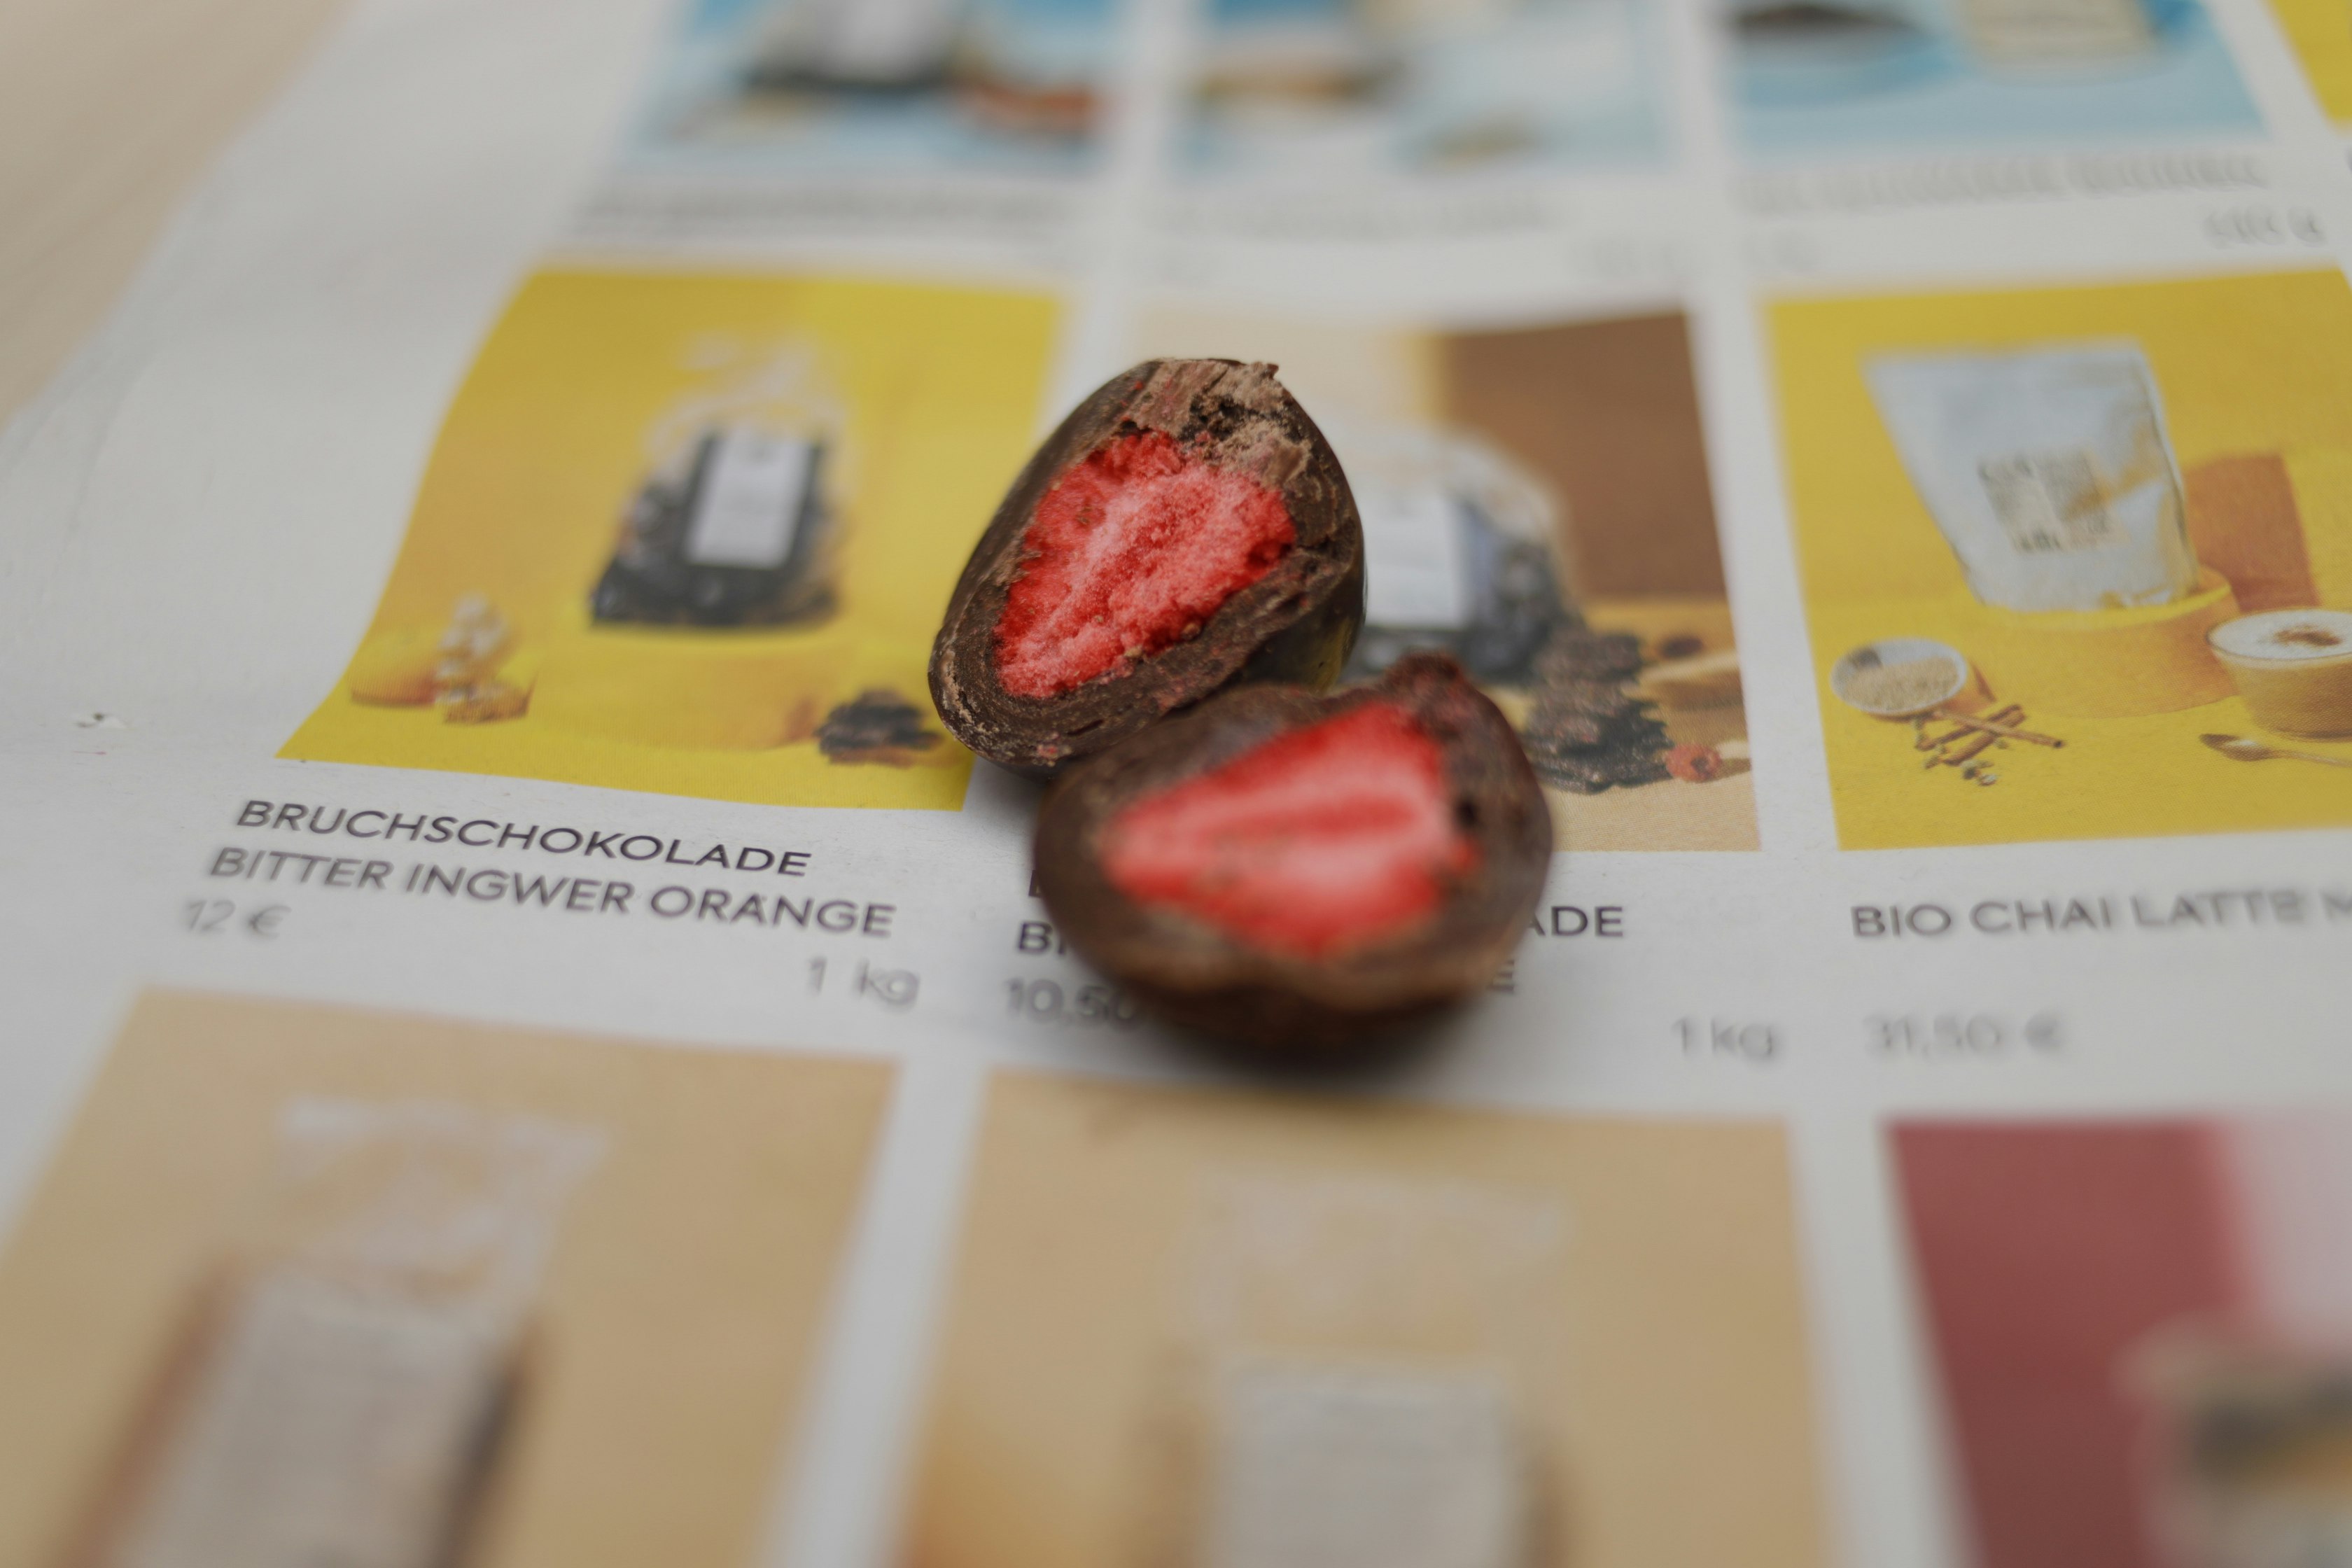 Gefriergetrocknete Erdbeeren in dunkler Schokolade kaufen | KoRo Germany